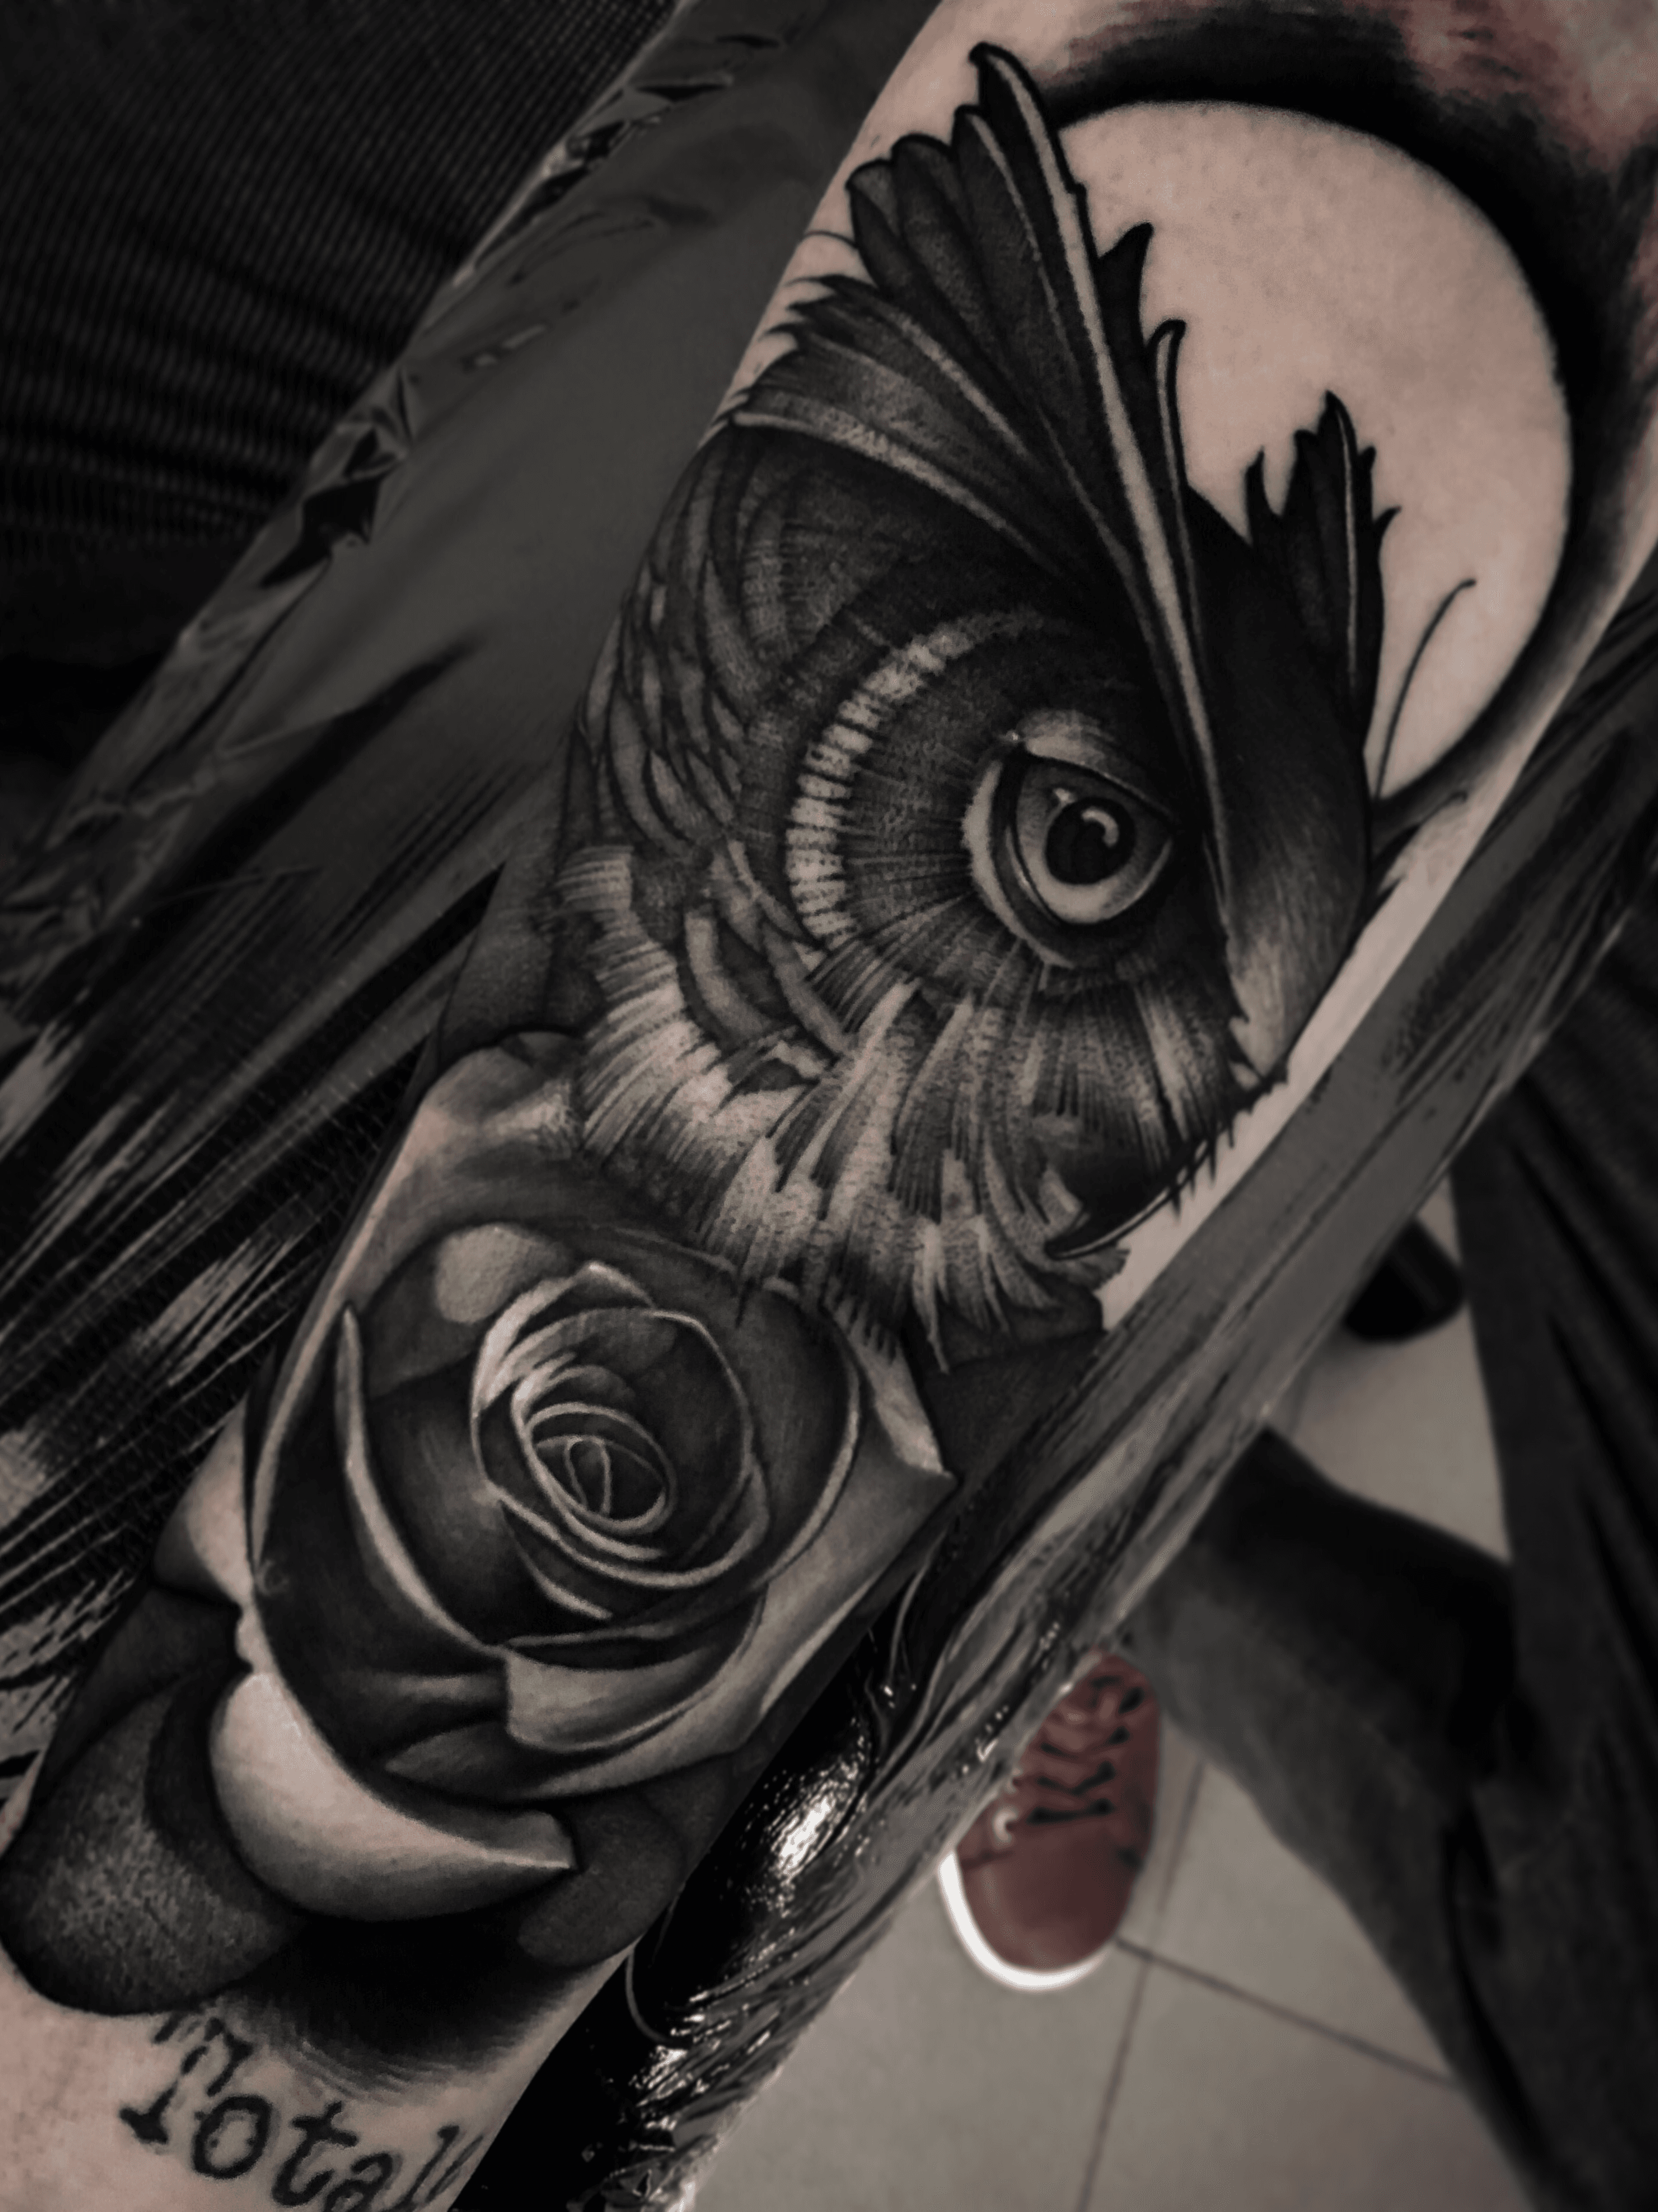 Lexica  Dark forearm tattoo owl 8k highly detailed black and grey